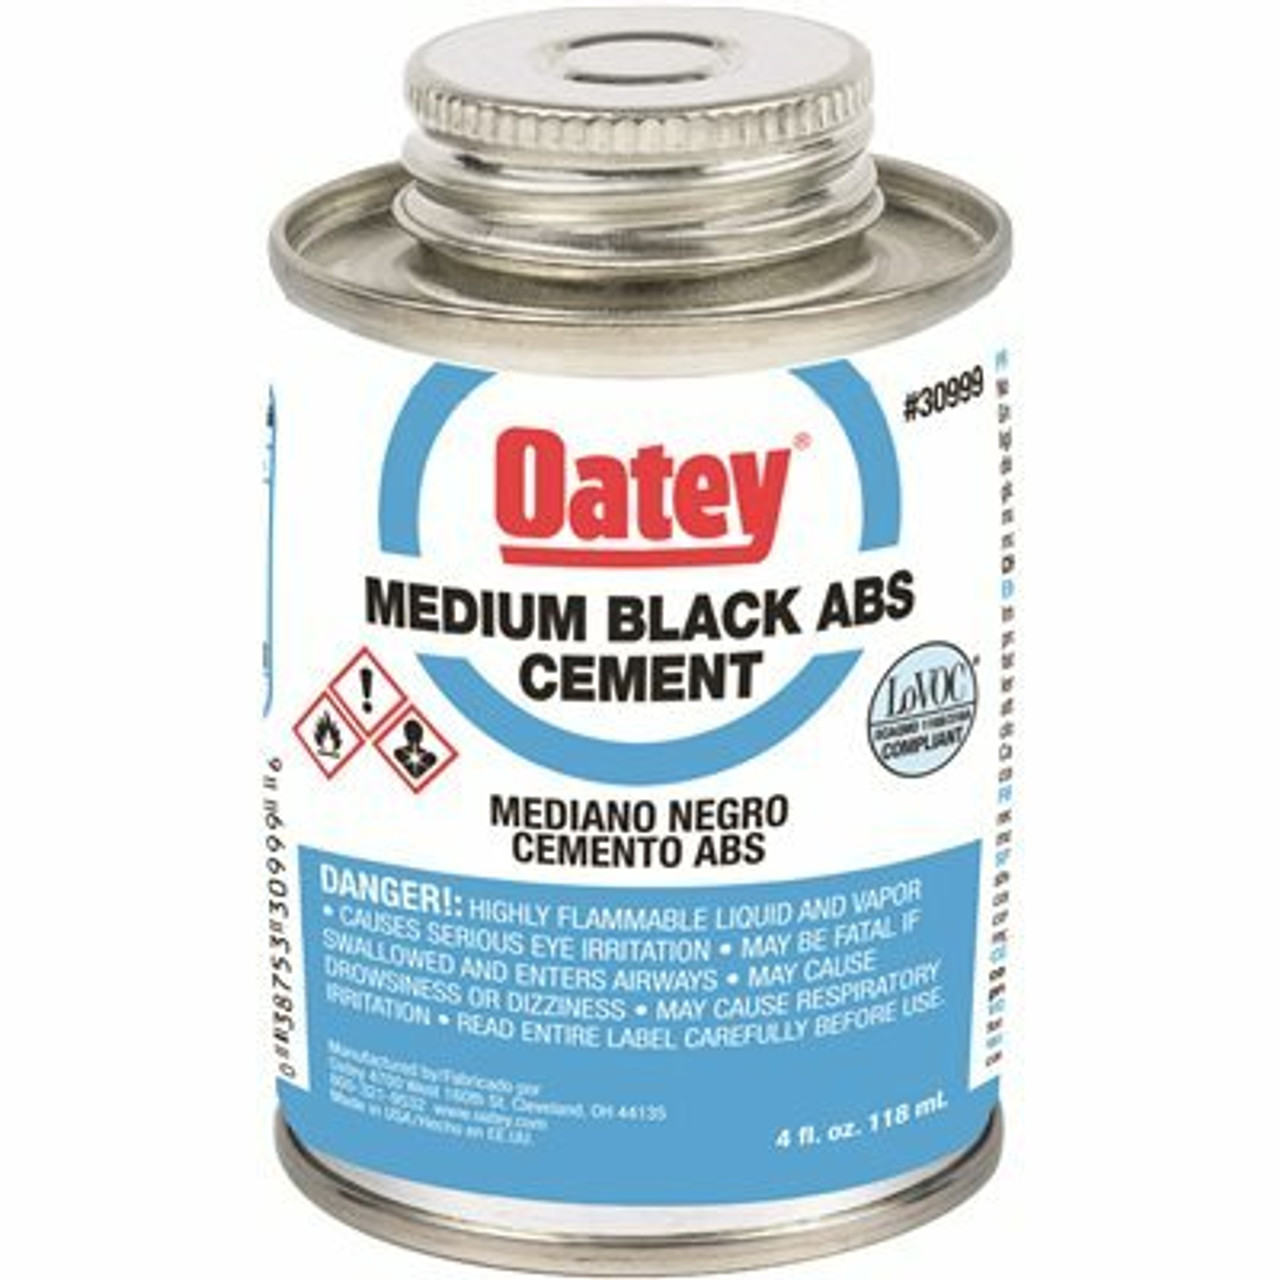 Oatey 4 Oz. Medium Black Abs Cement